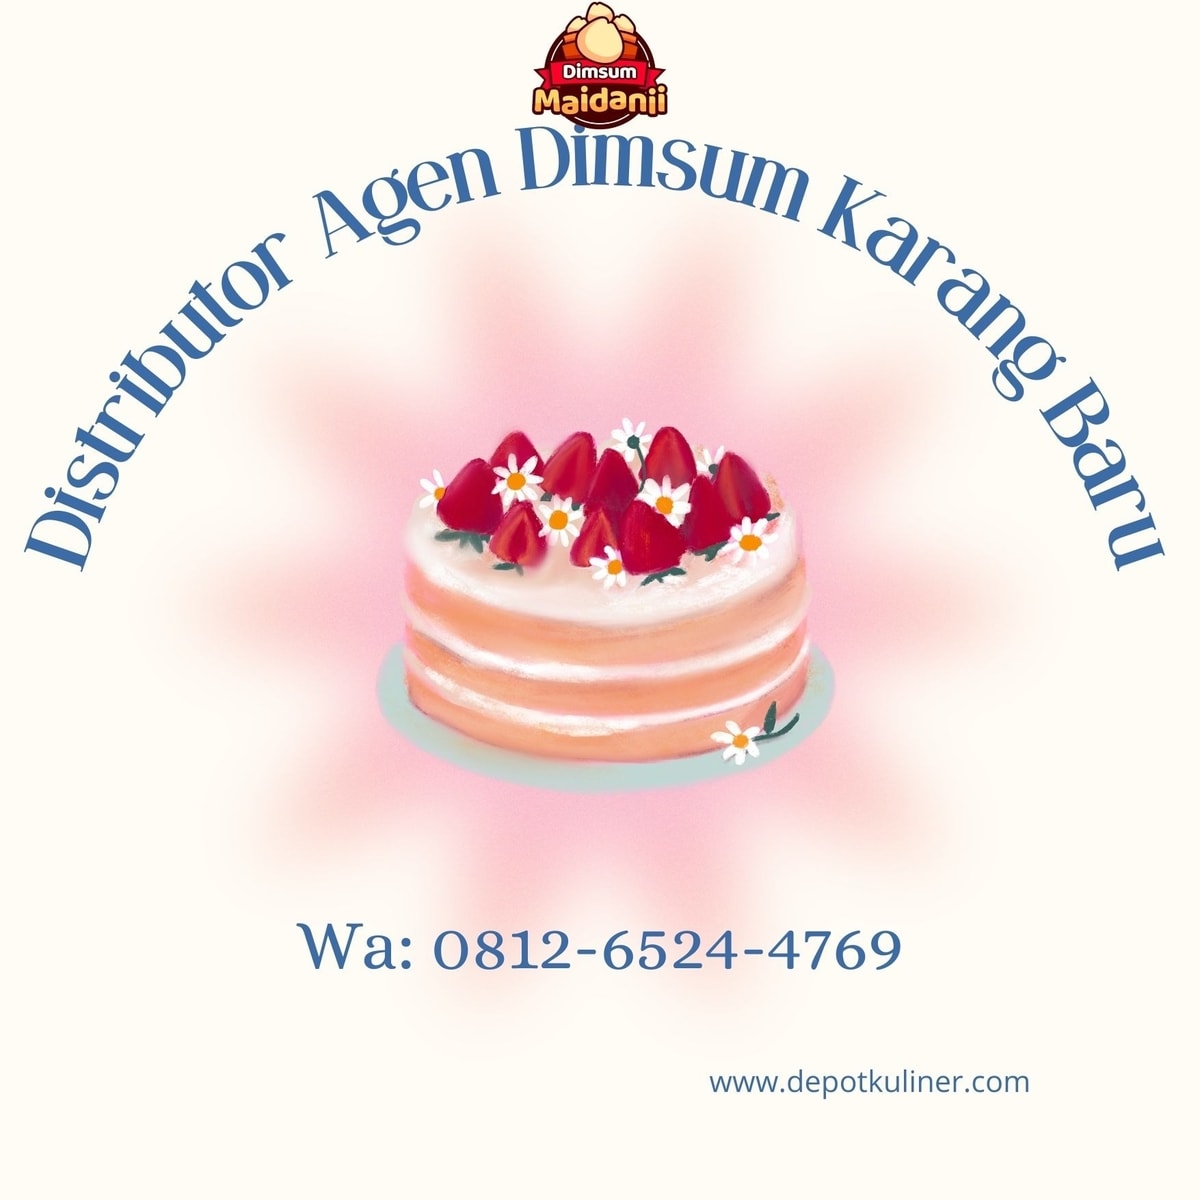 HARGA RESELLER, Call 0812-6524-4769, Distributor Agen Dimsum Karang Baru